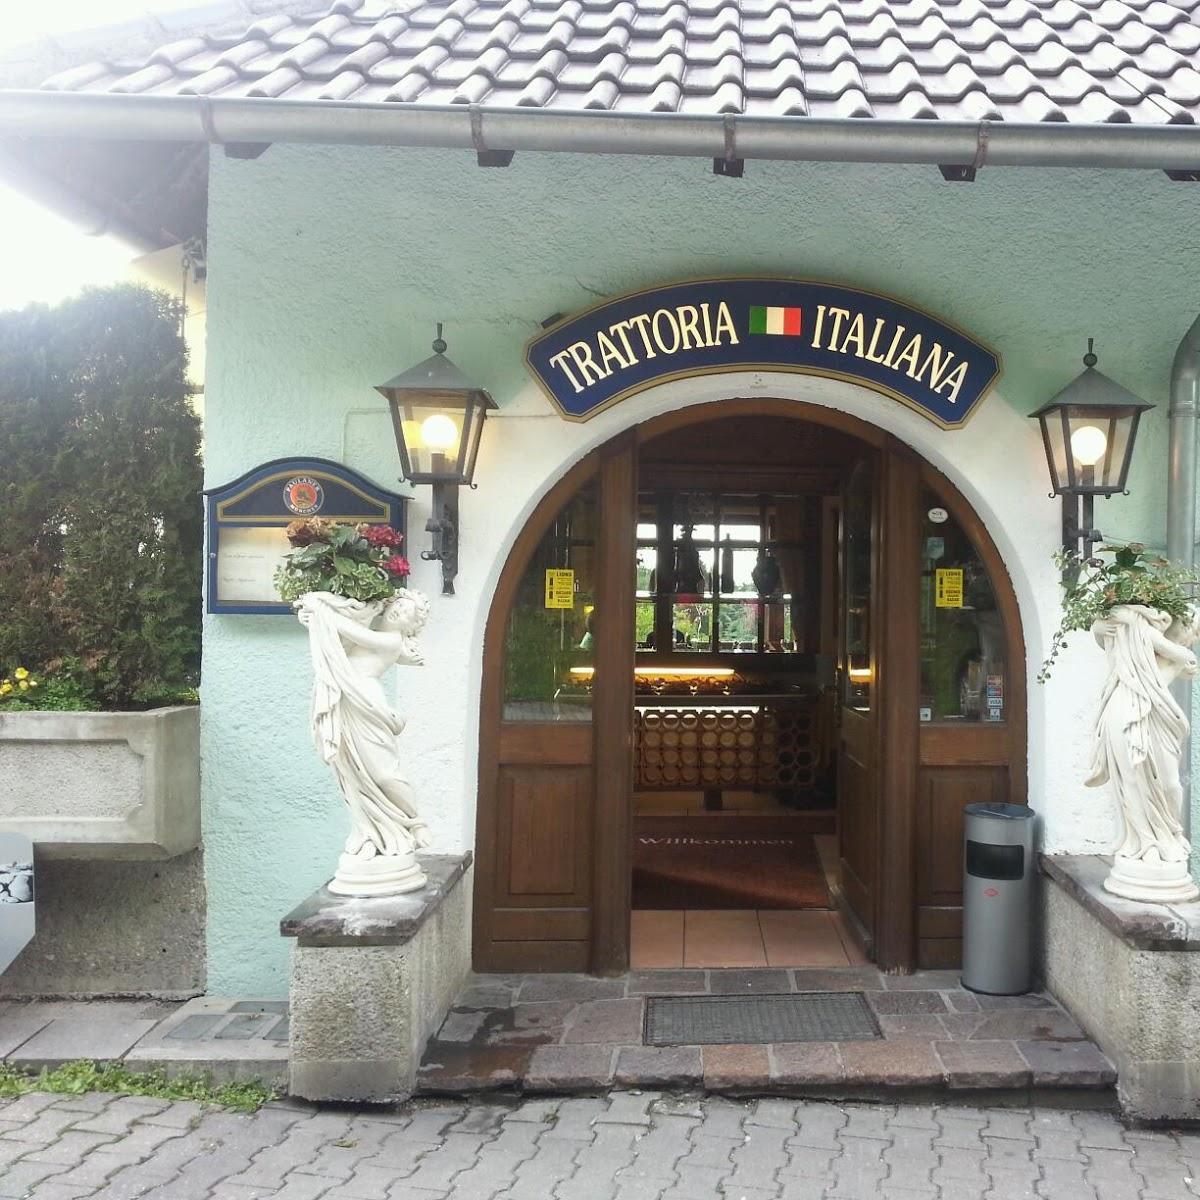 Restaurant "Trattoria italiana" in  Staffelsee